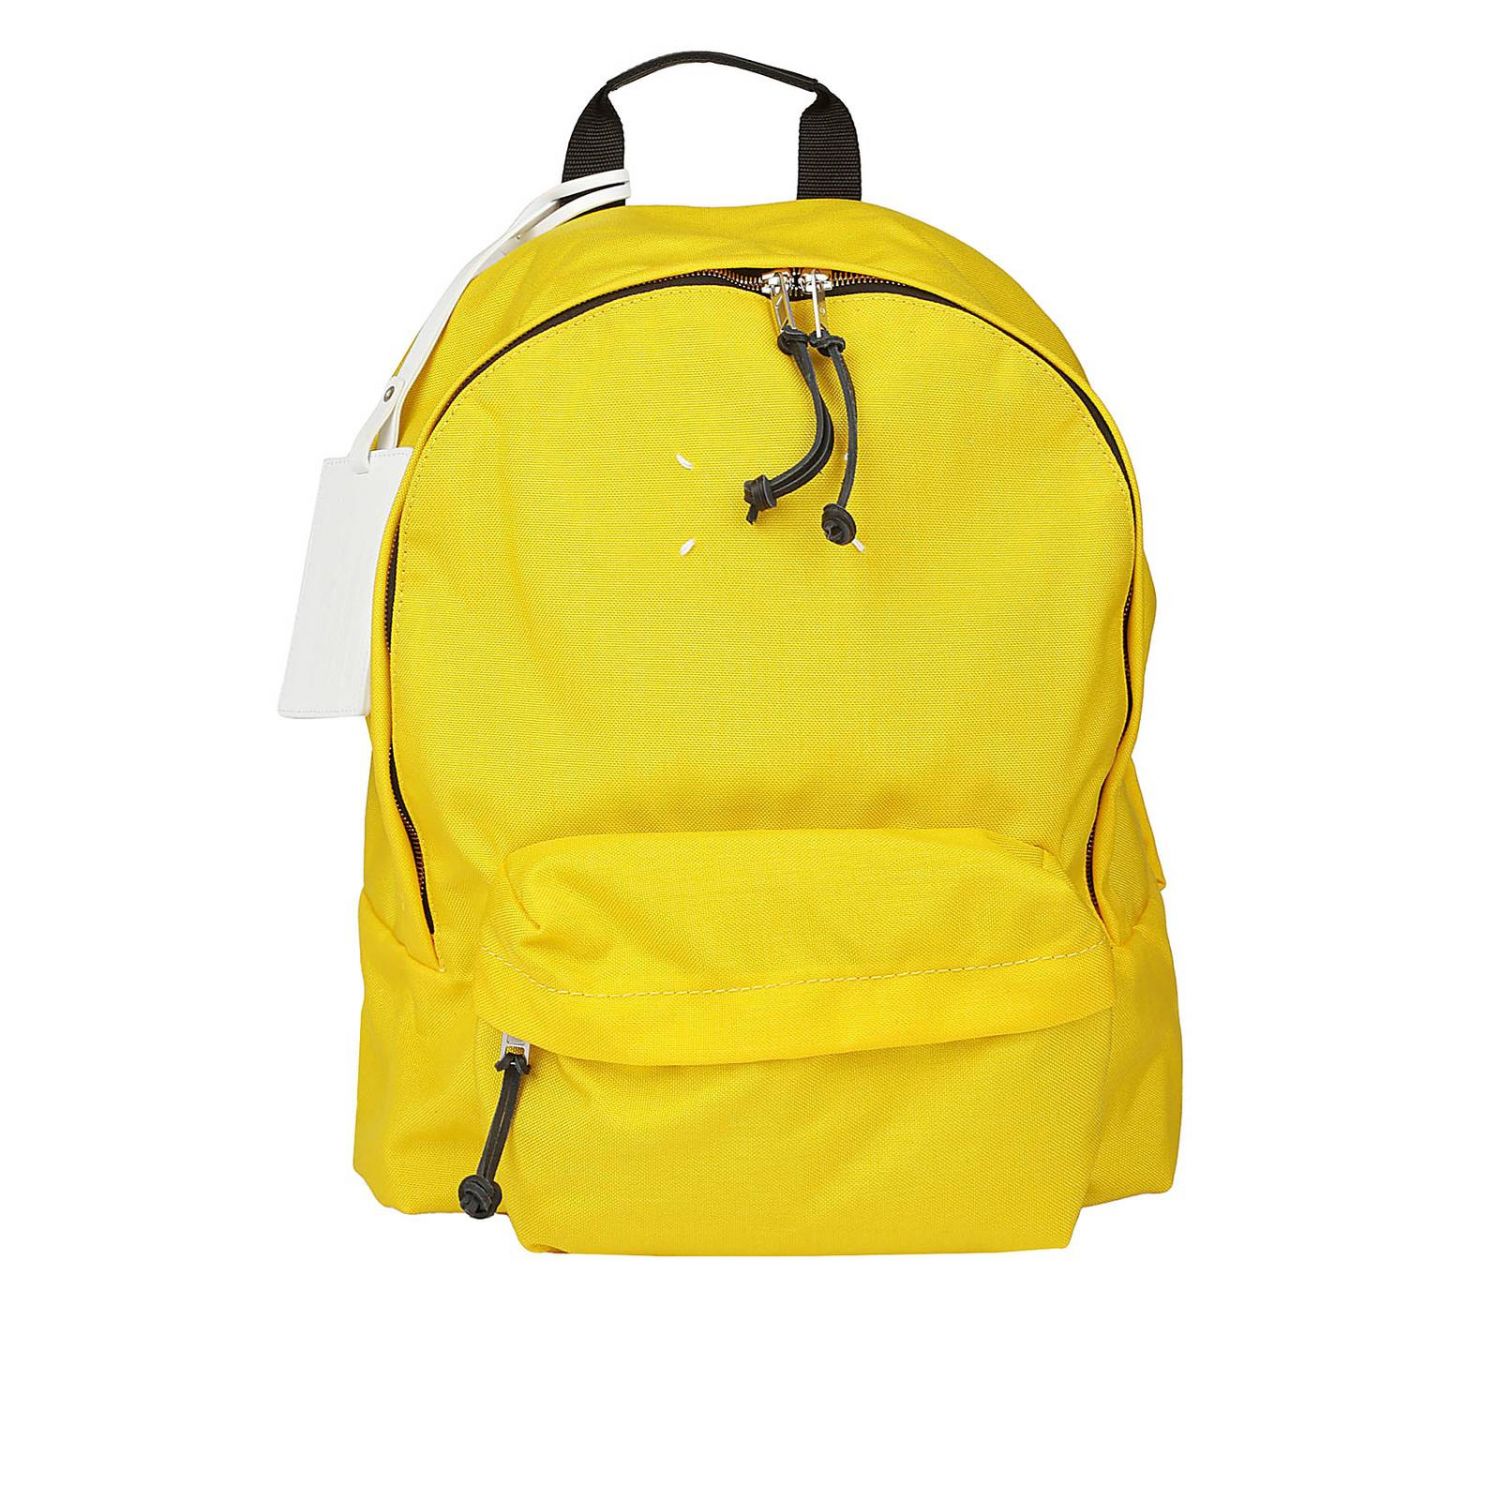 Maison Margiela Outlet: Backpack men - Yellow | Backpack Maison ...